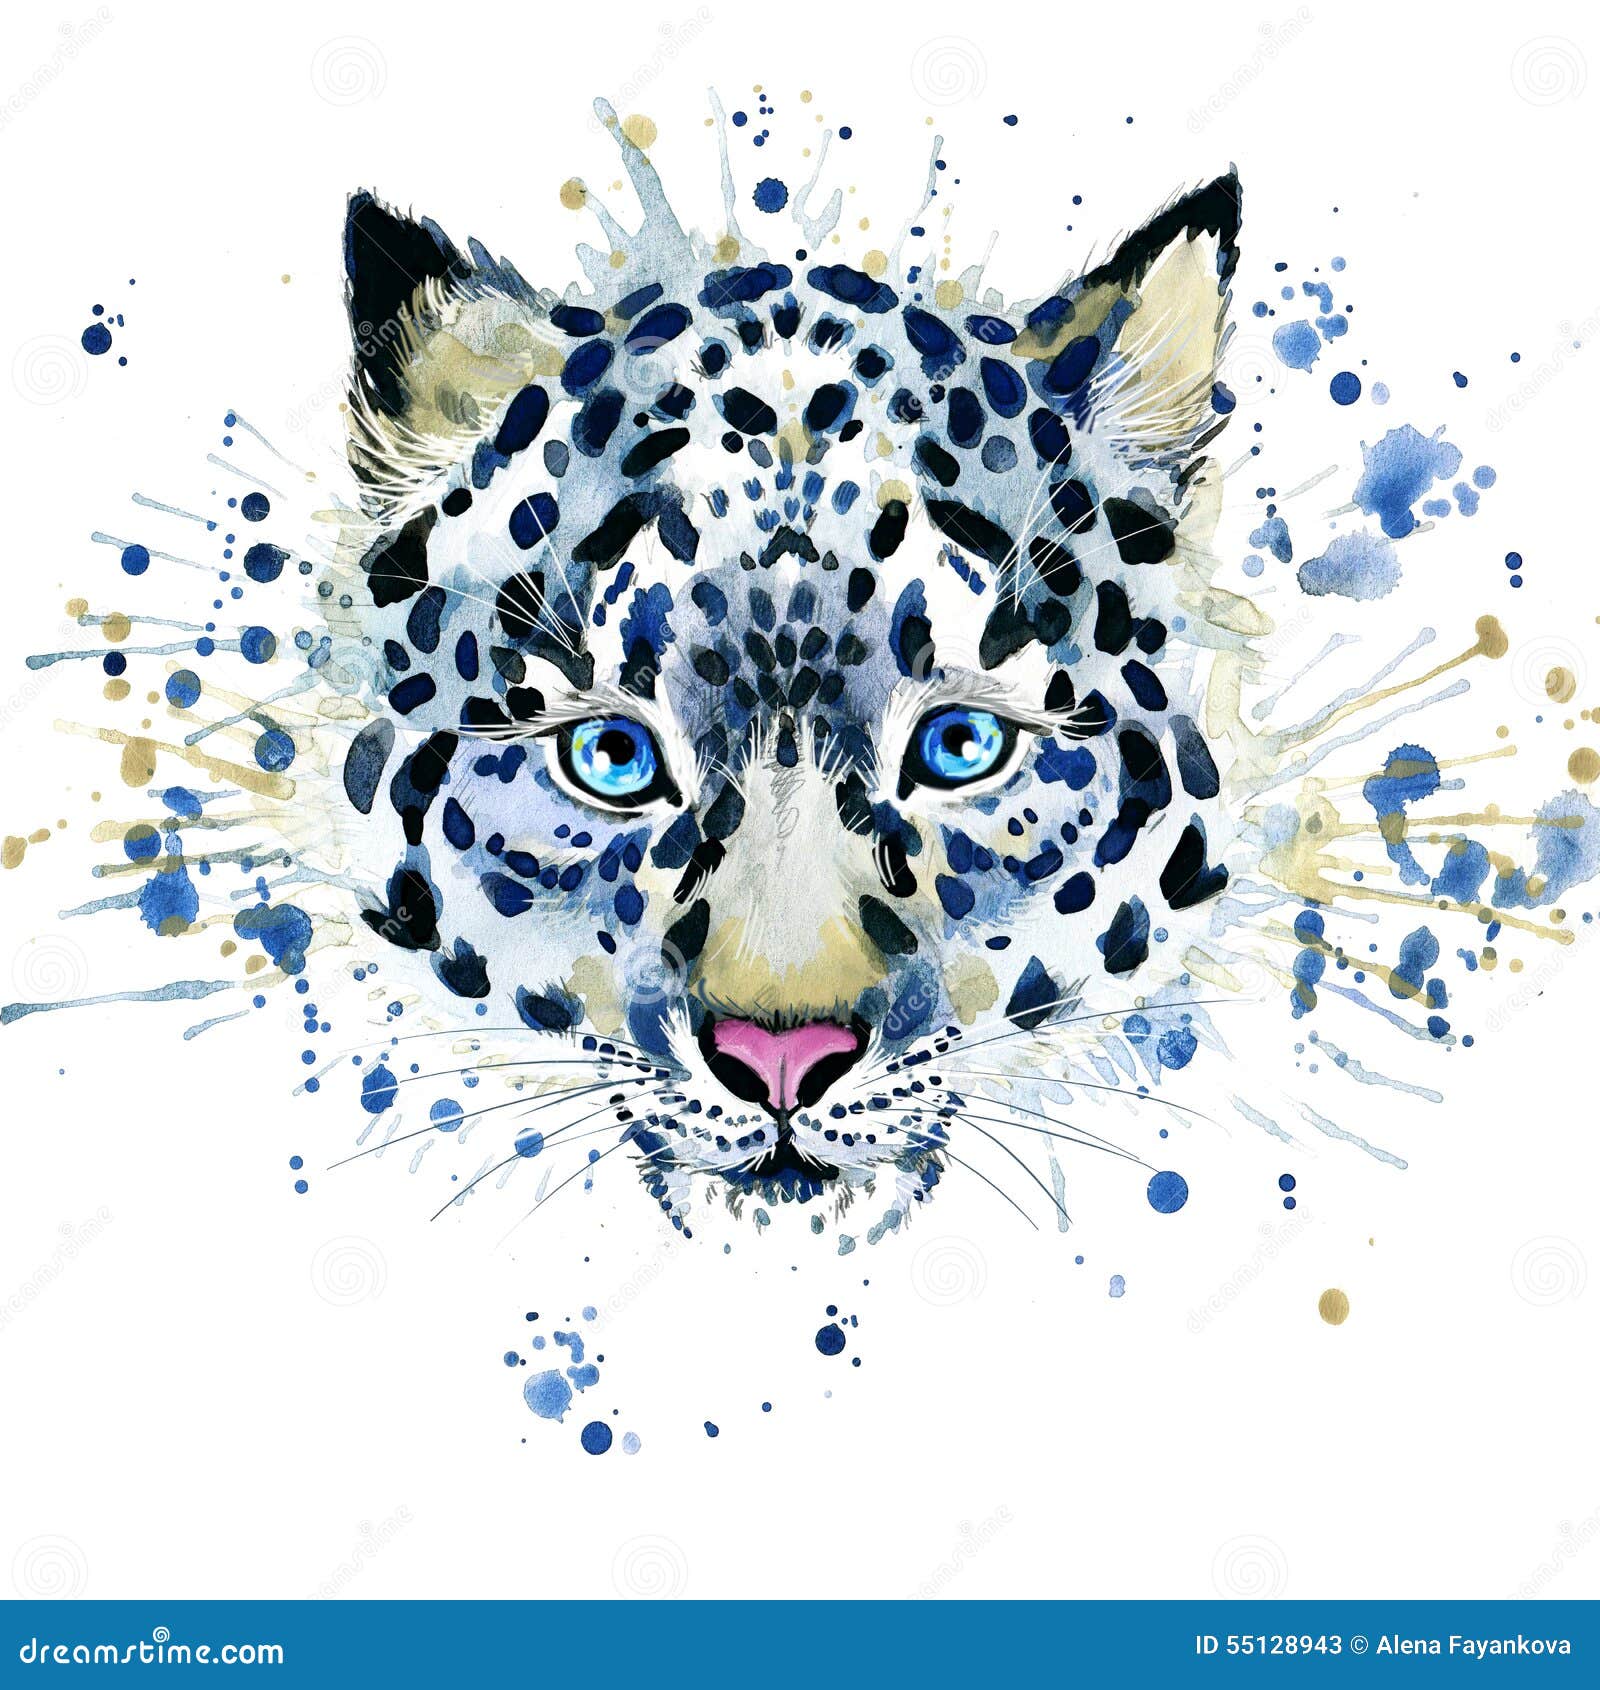 t-shirt graphics/cute snow leopard,  watercolor